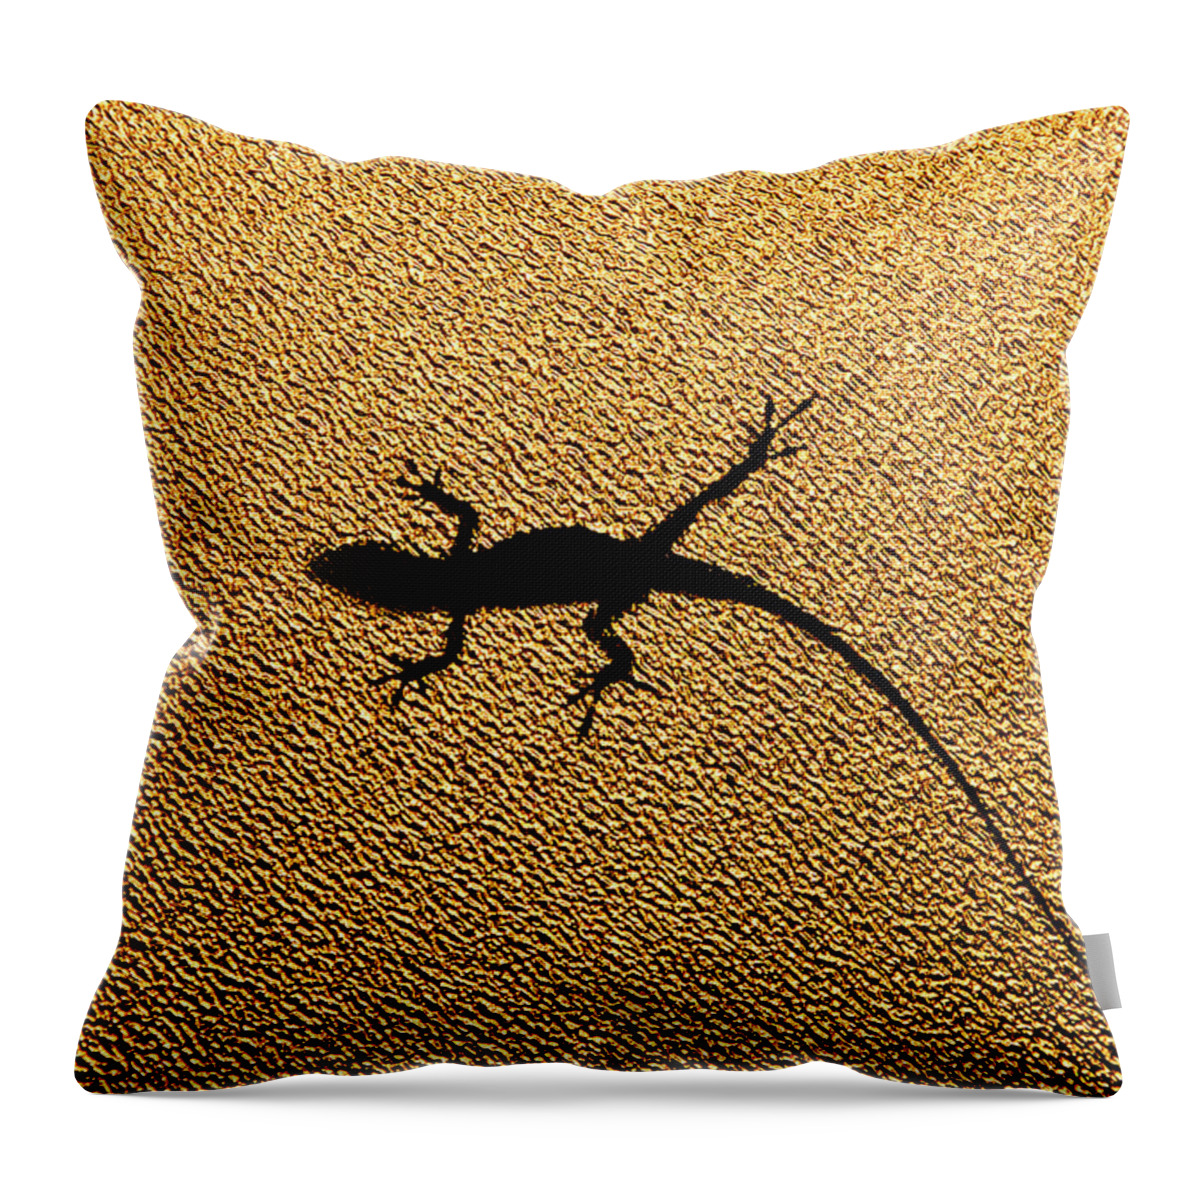 Animal Themes Throw Pillow featuring the photograph Bathroom Window Lizard by Bill Adams